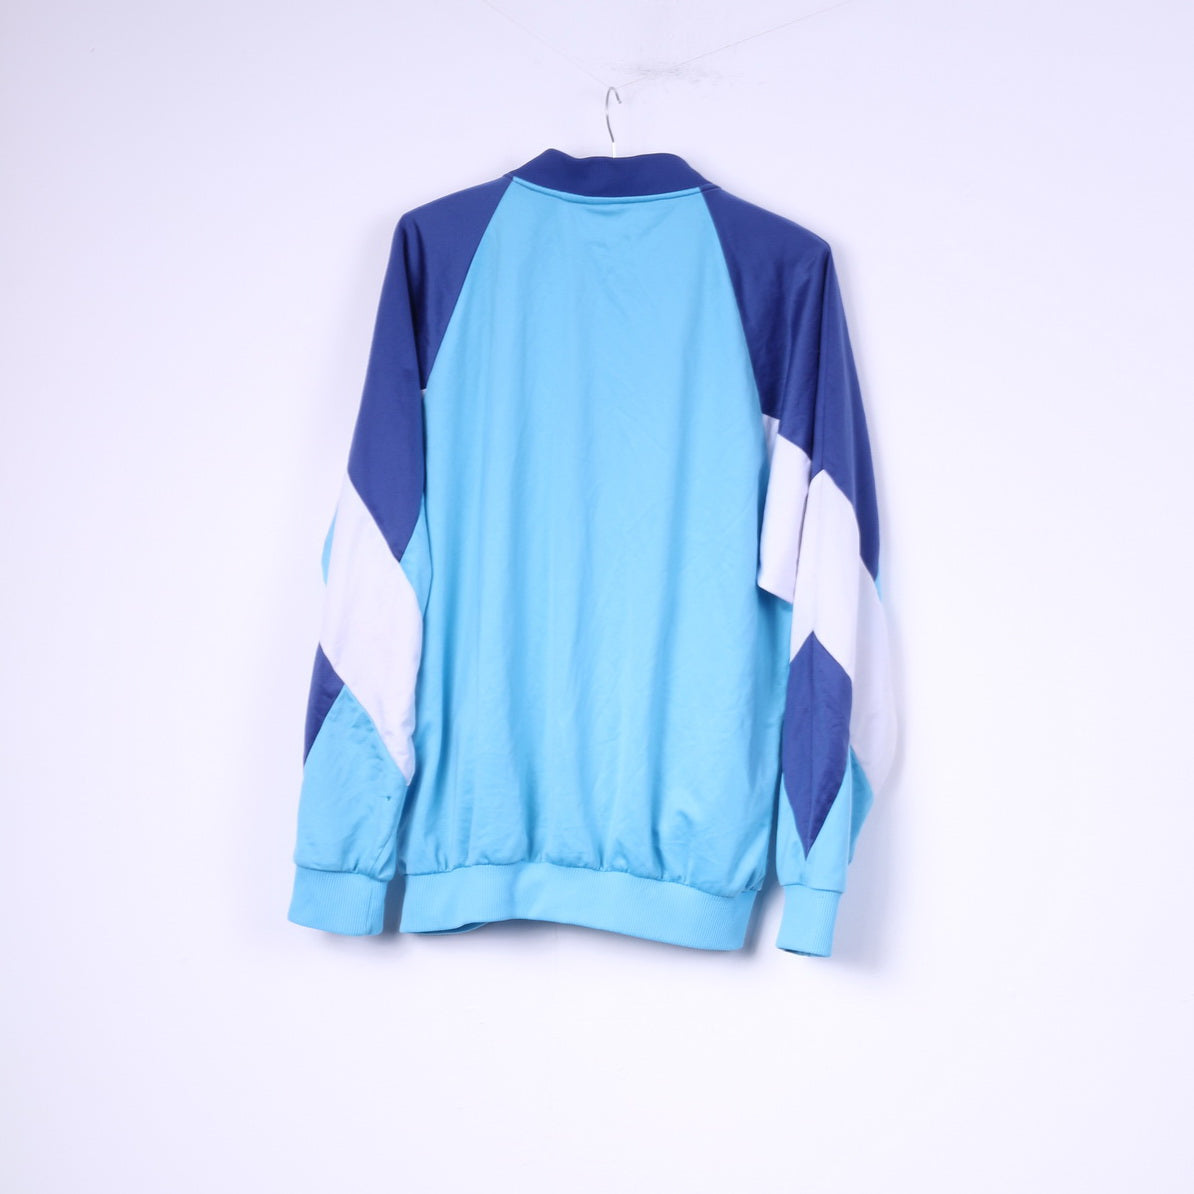 Puma Men 8 2XL Sweatshirt Blue Vintage Full Zipper Shiny Sportswear Top